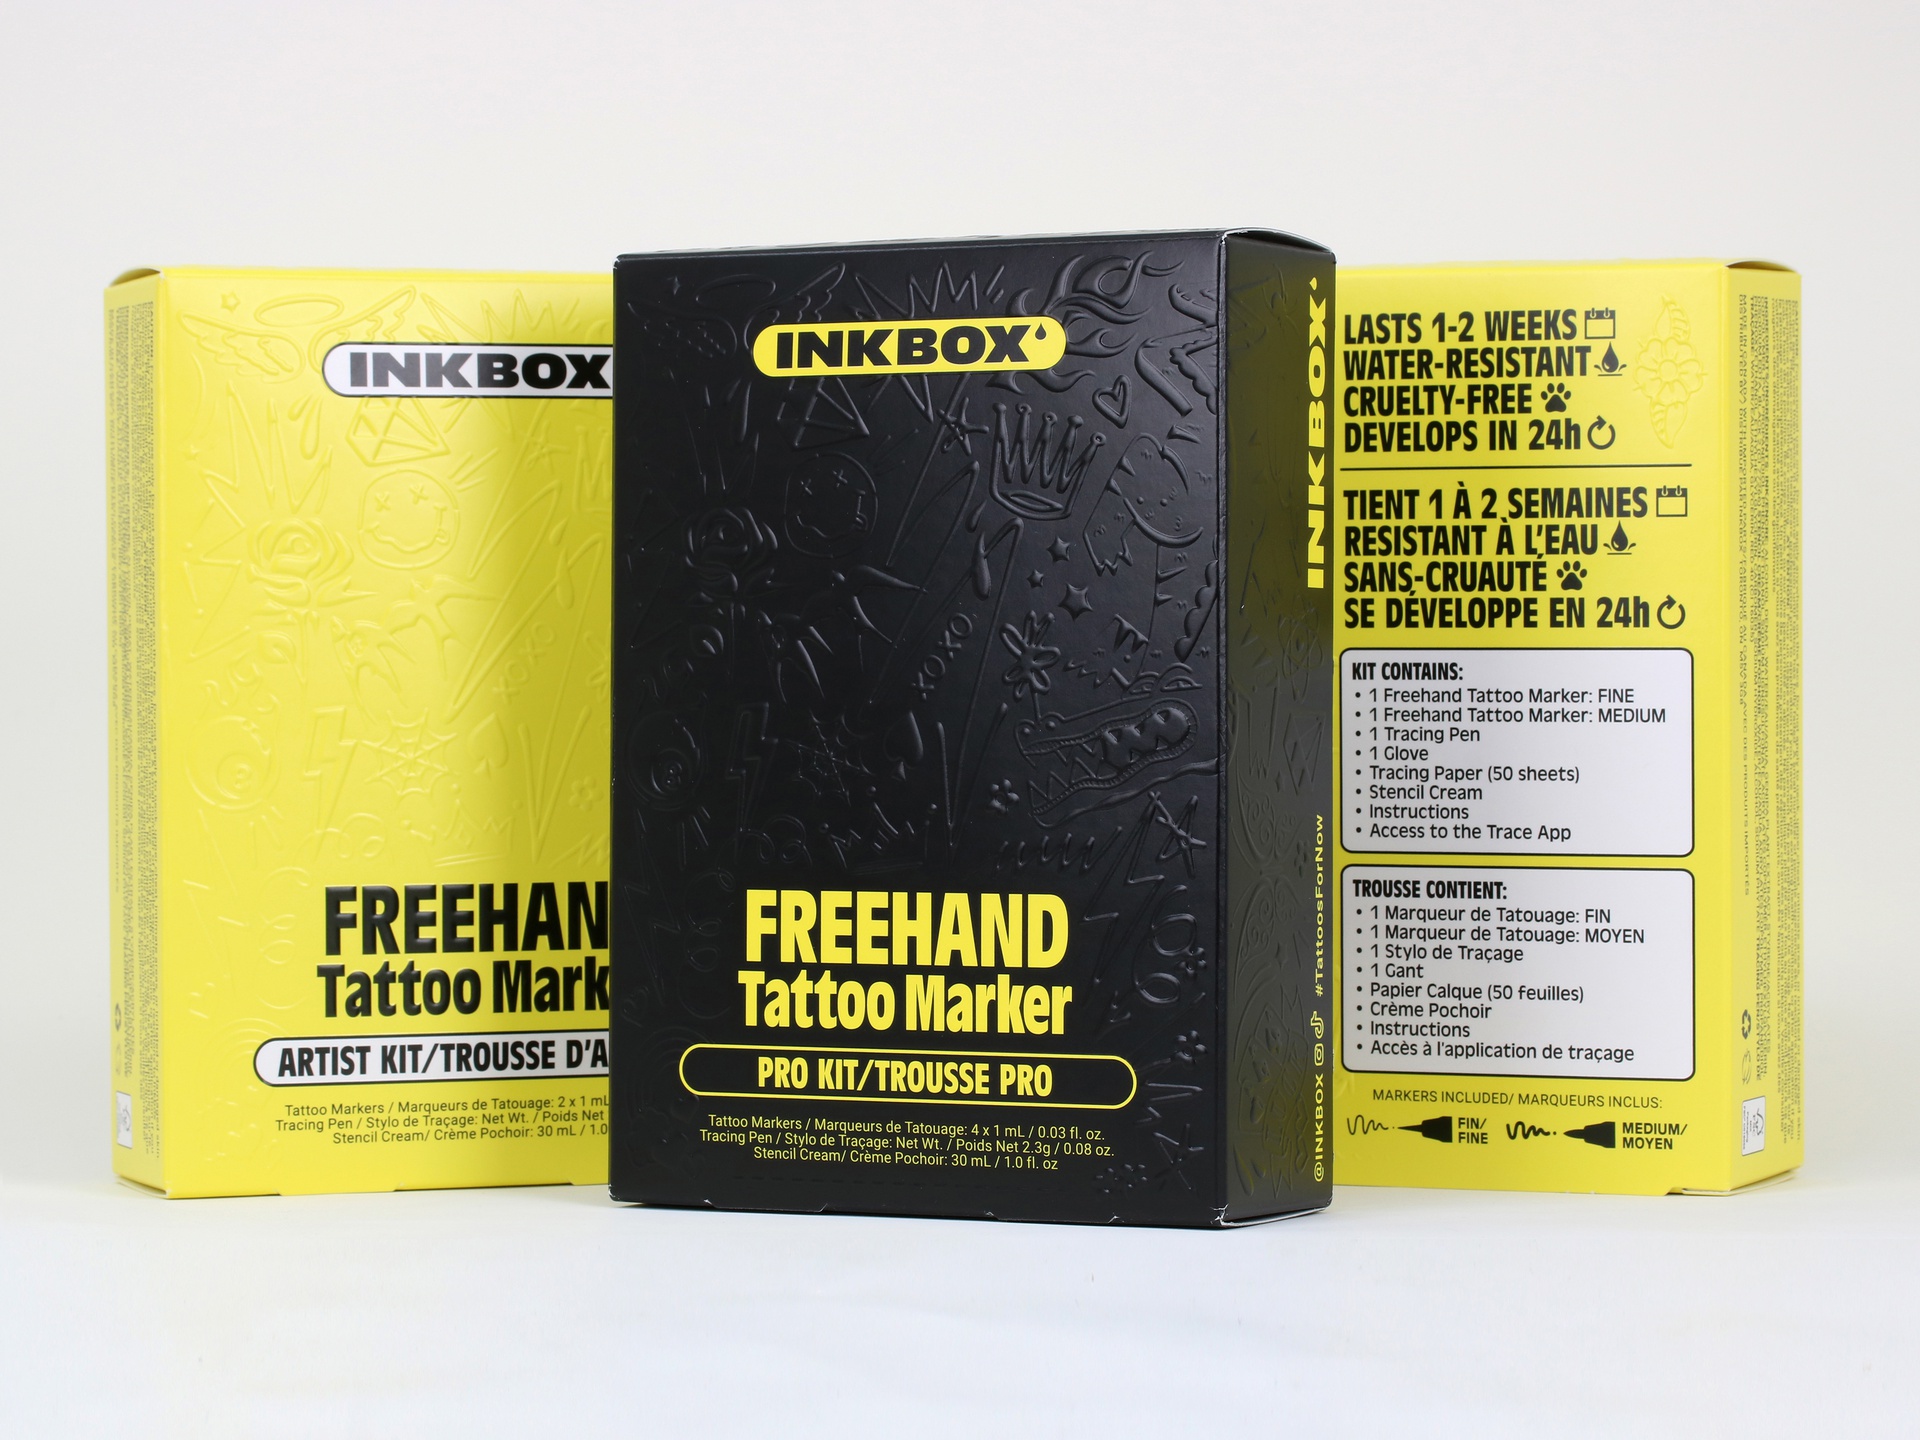 Inkbox Freehand Tattoo Marker Kit packaging